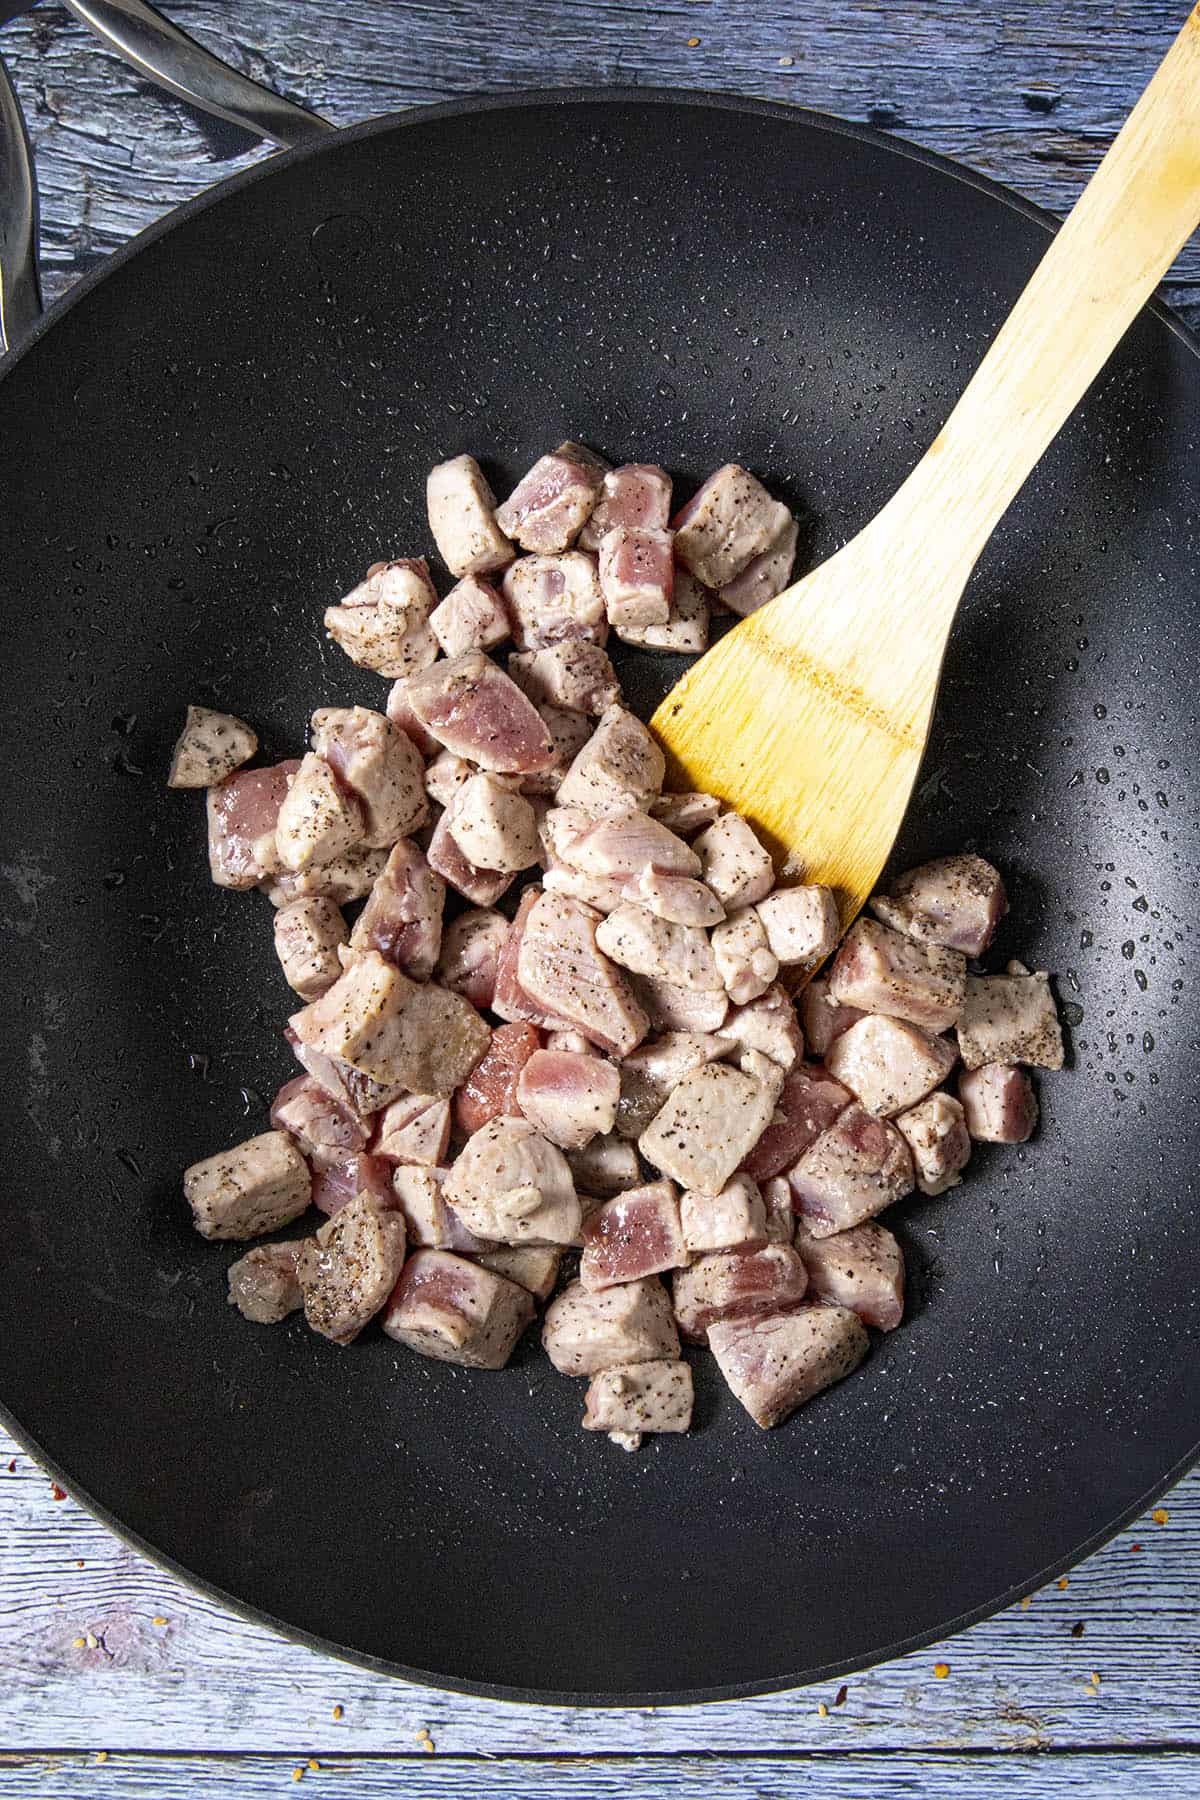 Cooking chunks of pork tenderloin in a pan to make Pork Stir Fry.